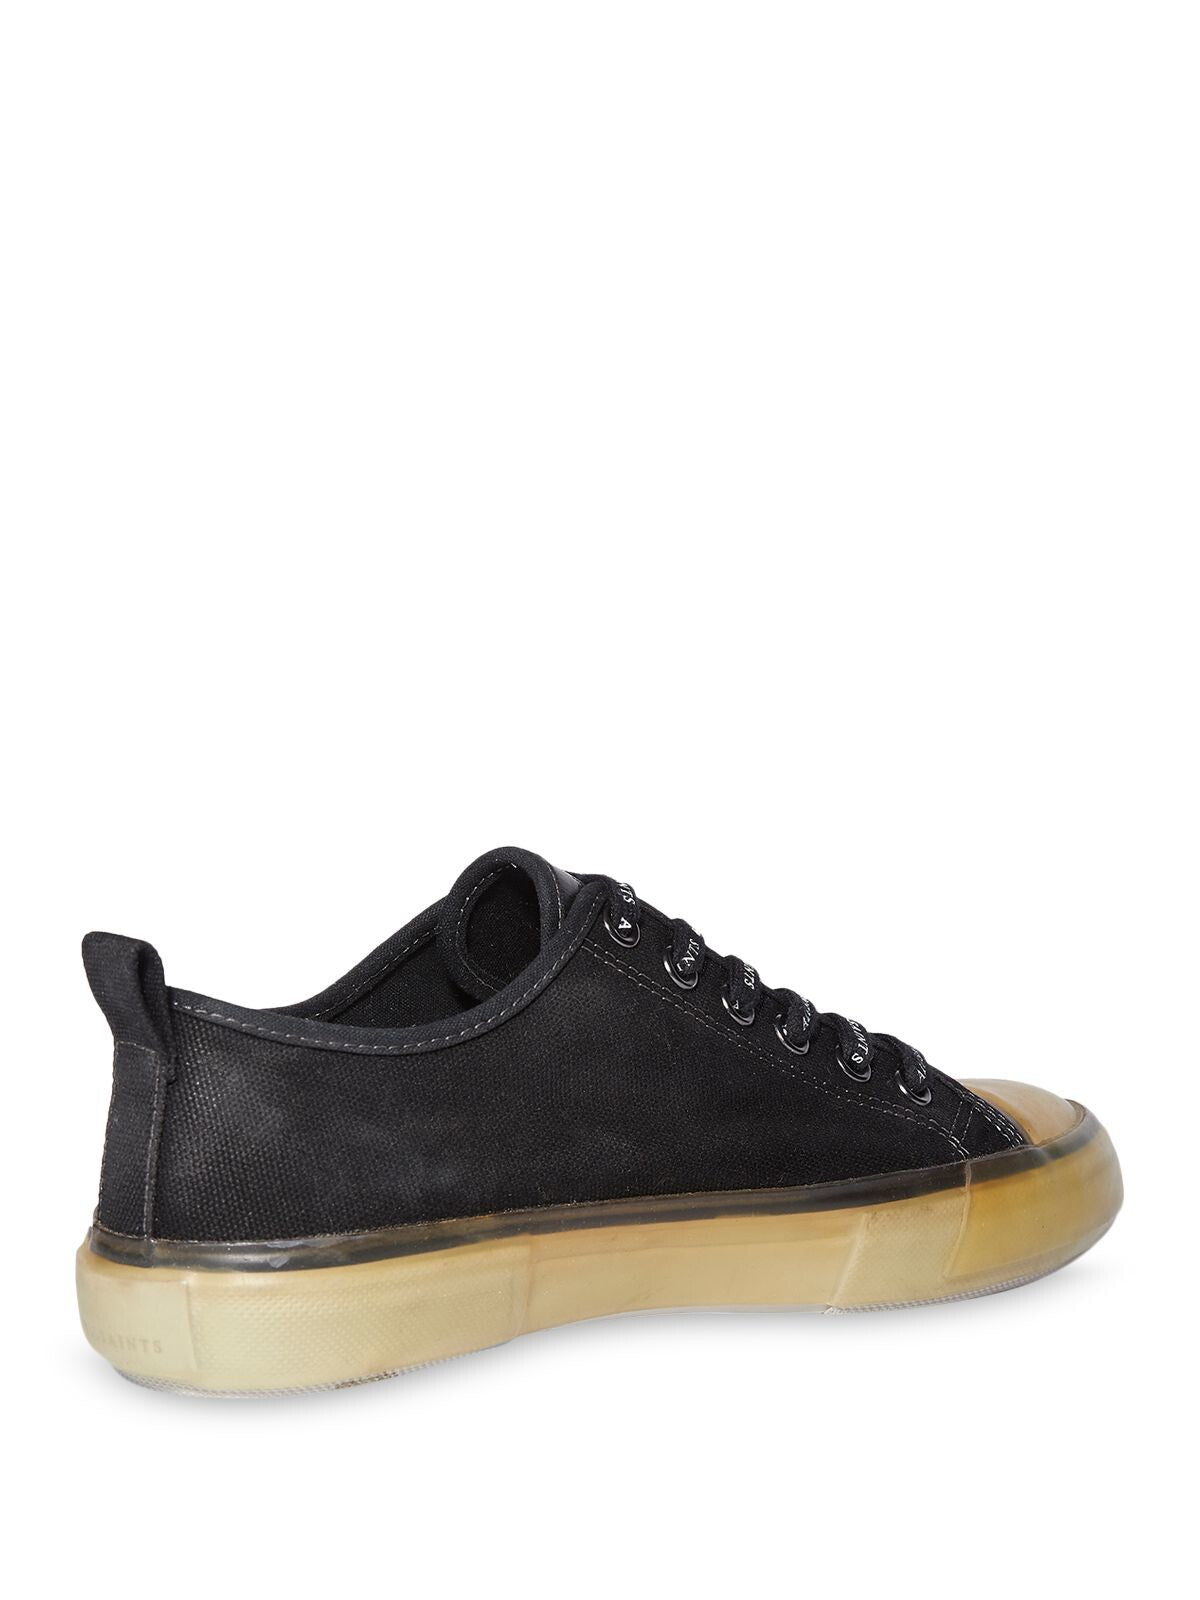 ALLSAINTS Mens Black Padded Logo Jaxon Cap Toe Platform Lace-Up Leather Athletic Sneakers Shoes 10